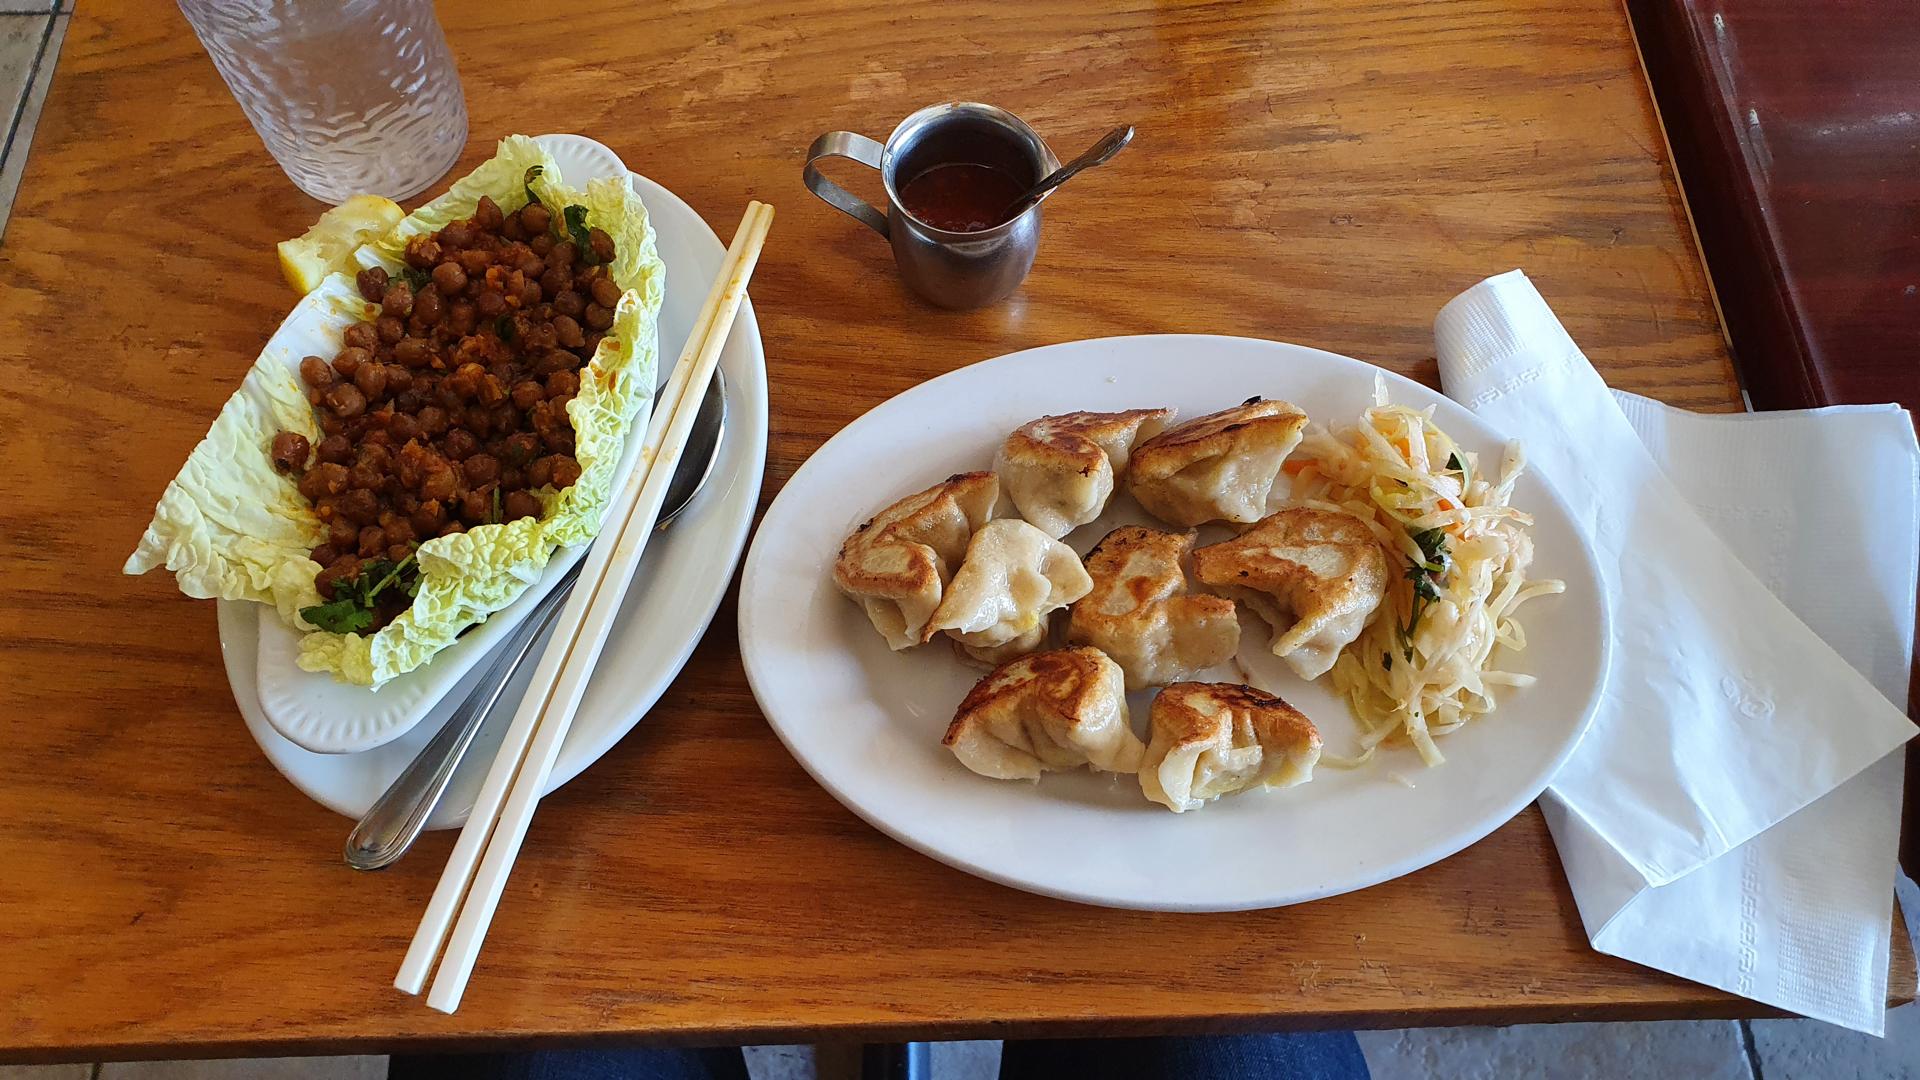 Vegan Tibetan food at Cafe Himalaya in East Village, New York